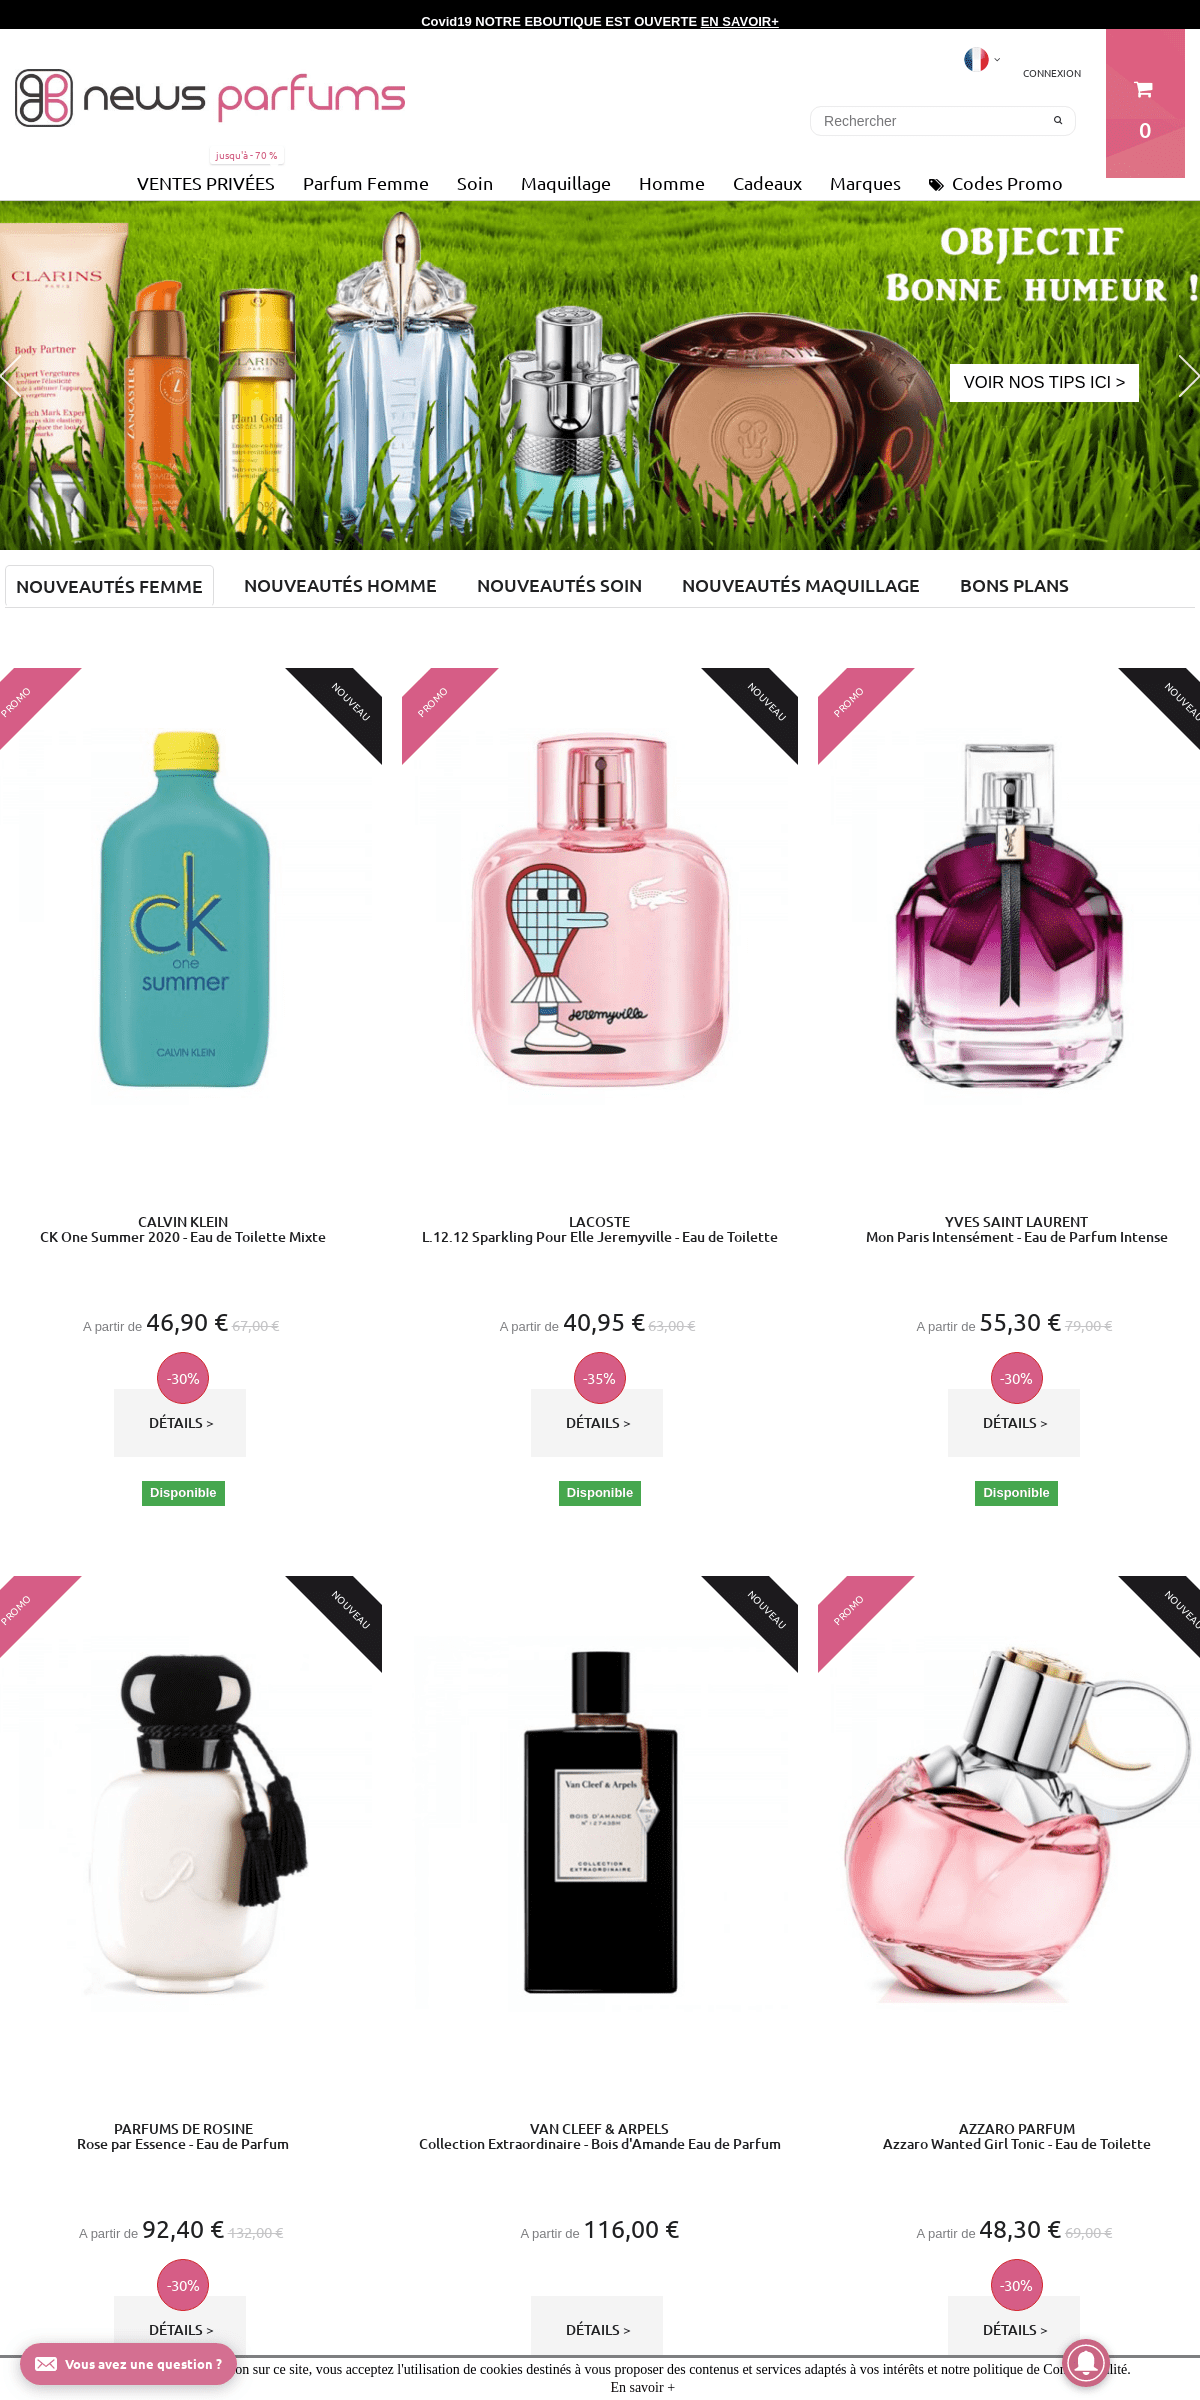 A complete backup of news-parfums.com